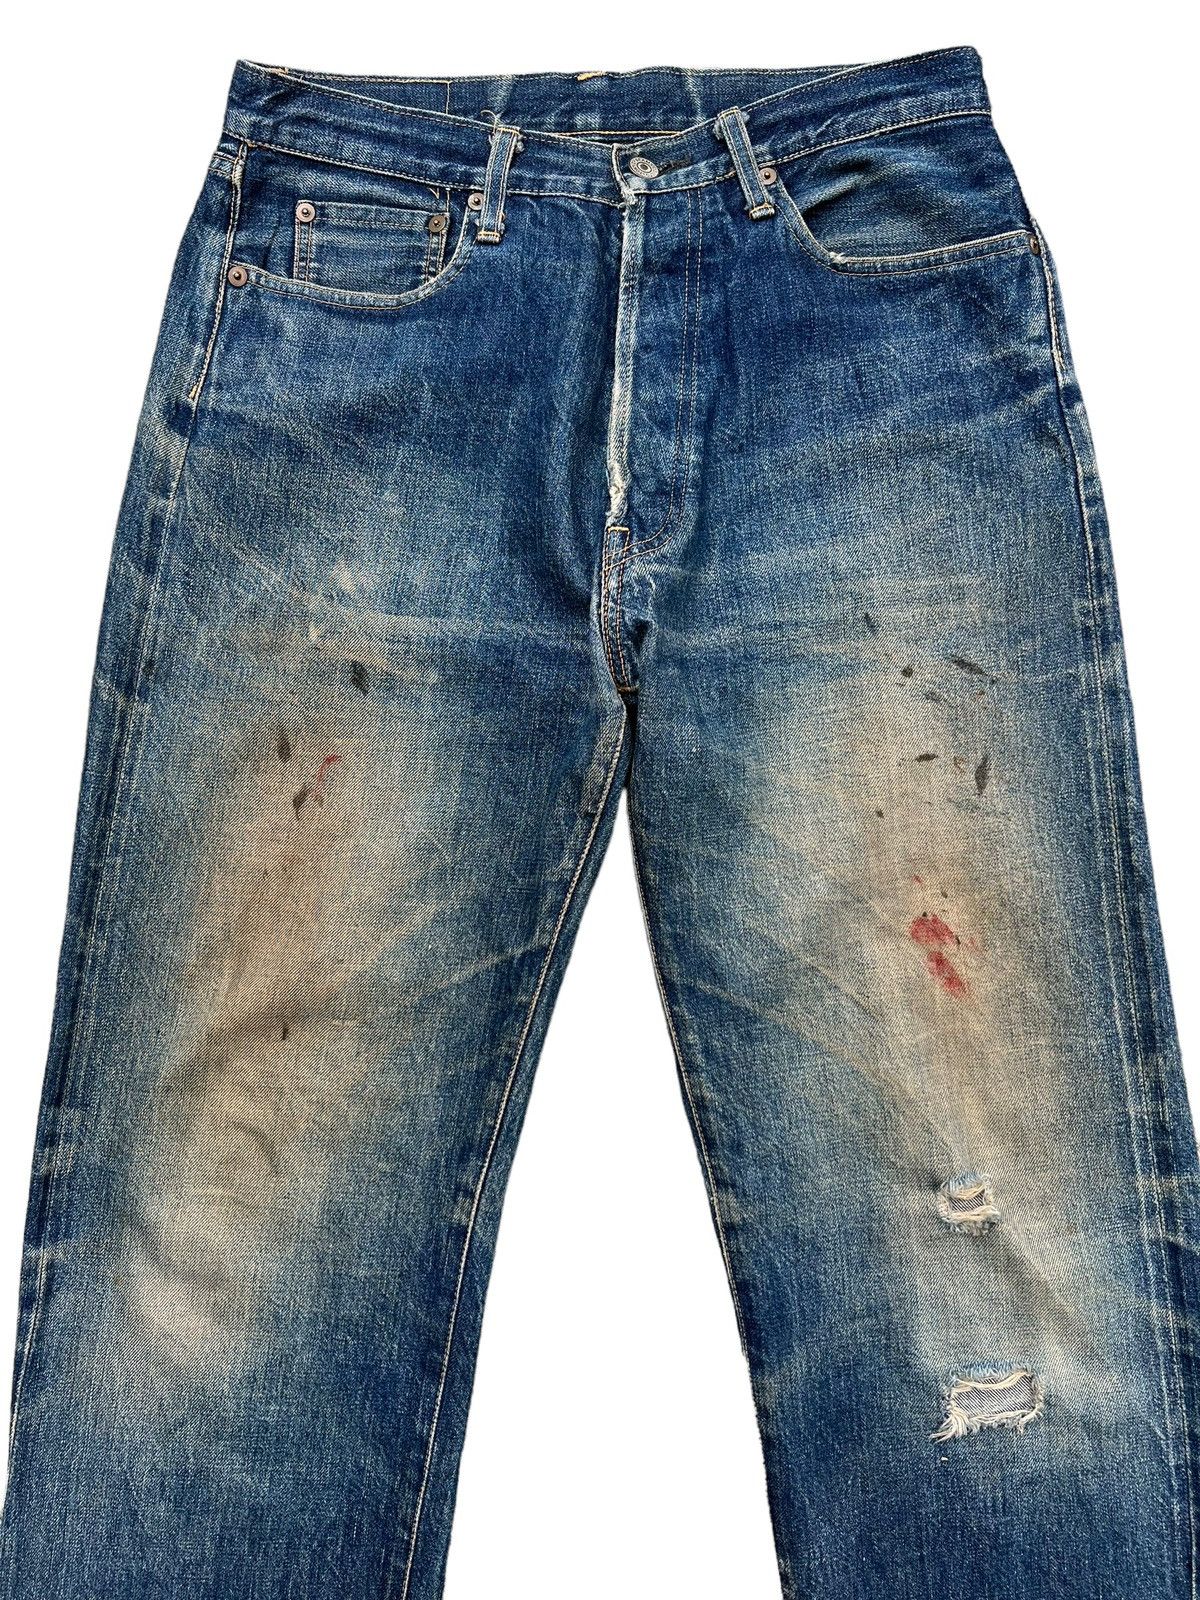 Vtg Beams Plus Japan Selvedge Distressed Mudwash Denim Jeans - 4